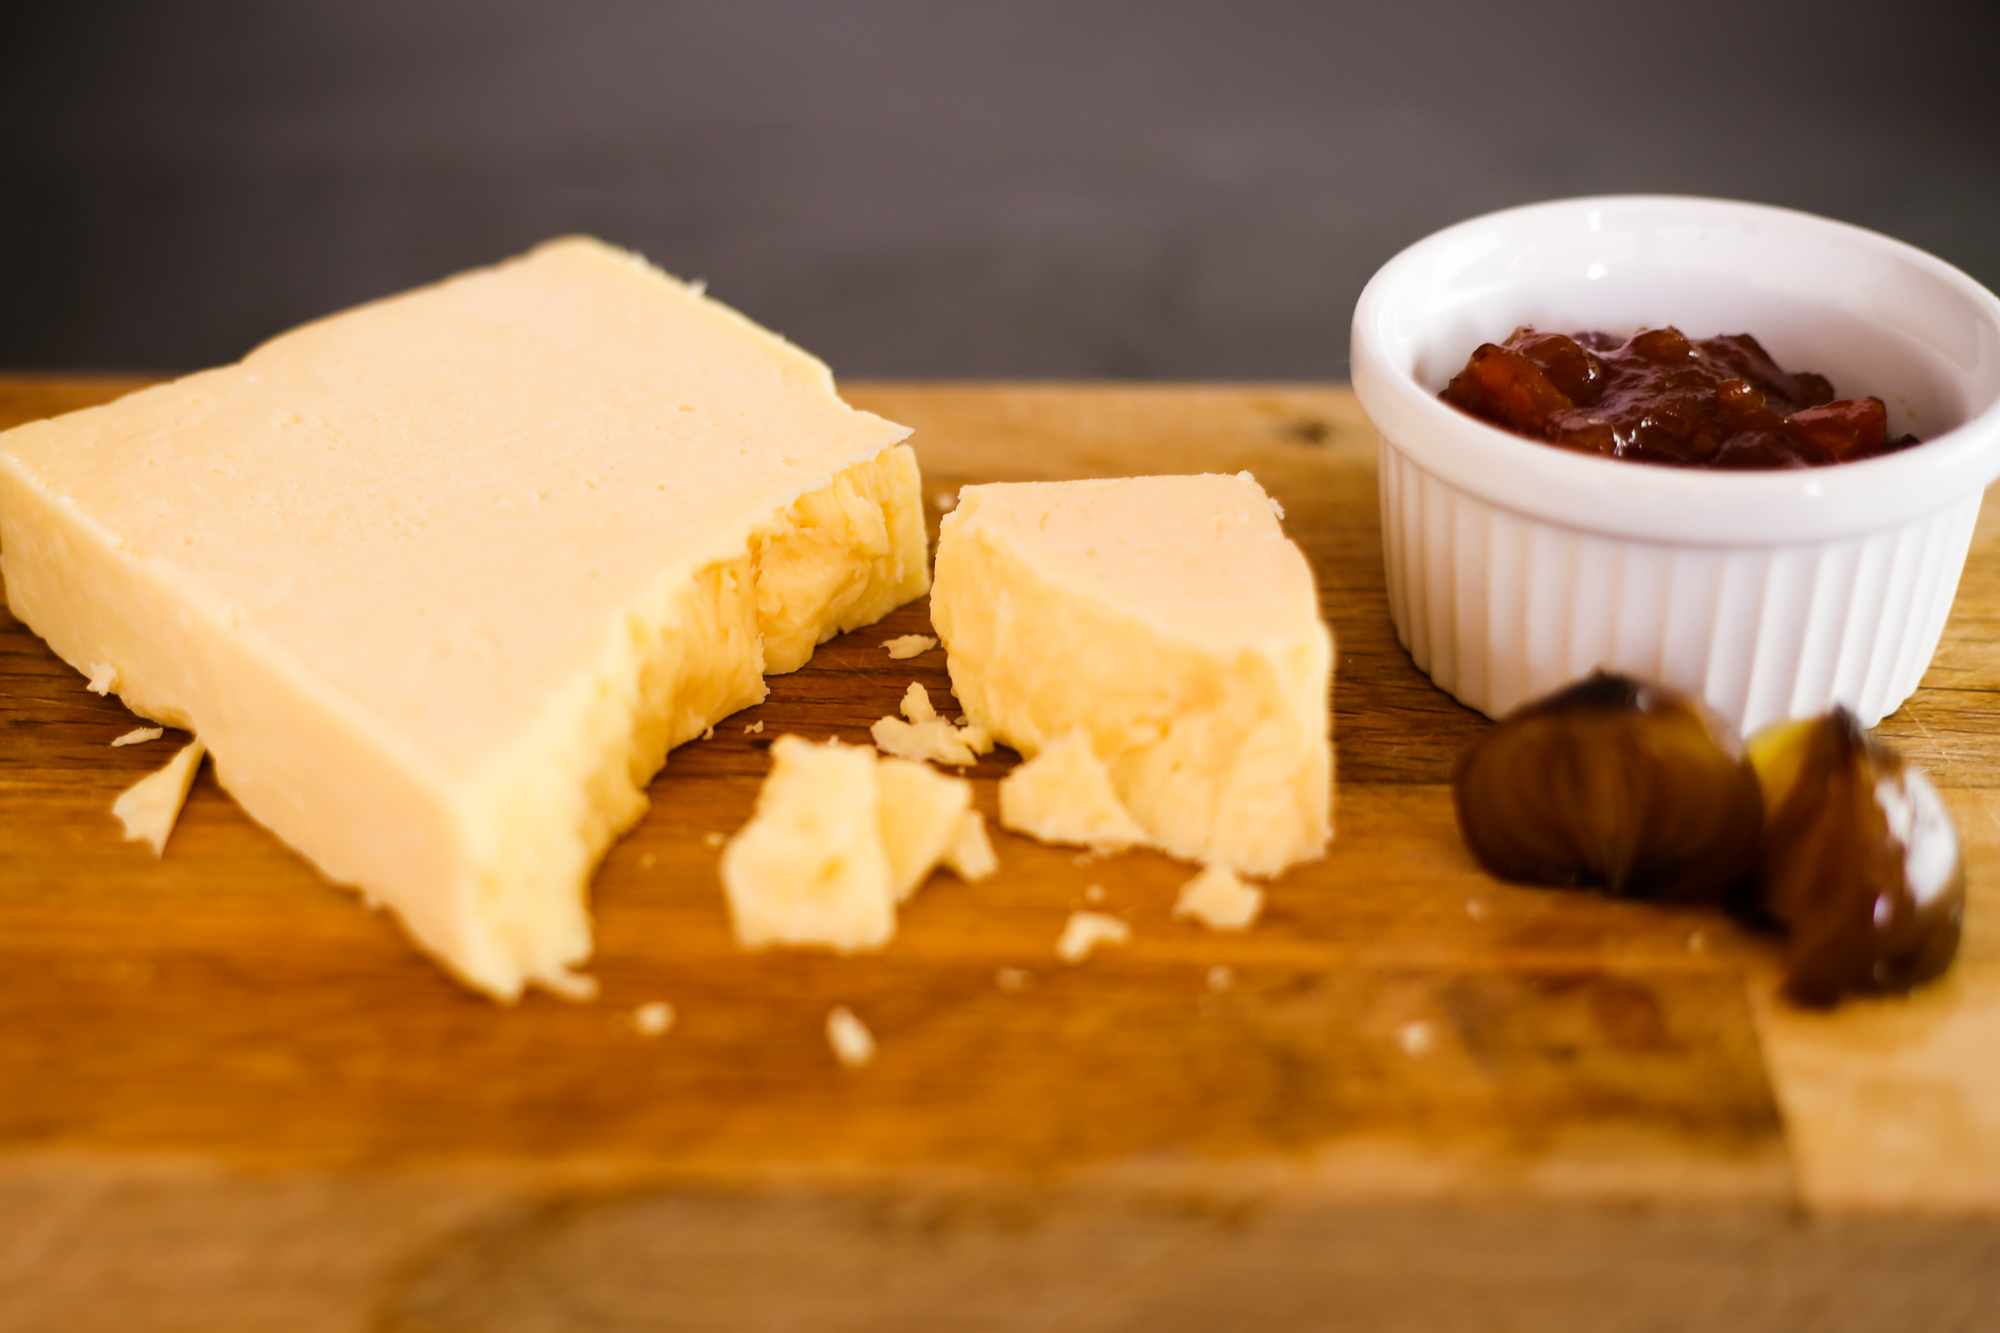 Hawkridge mature cheddar cheese